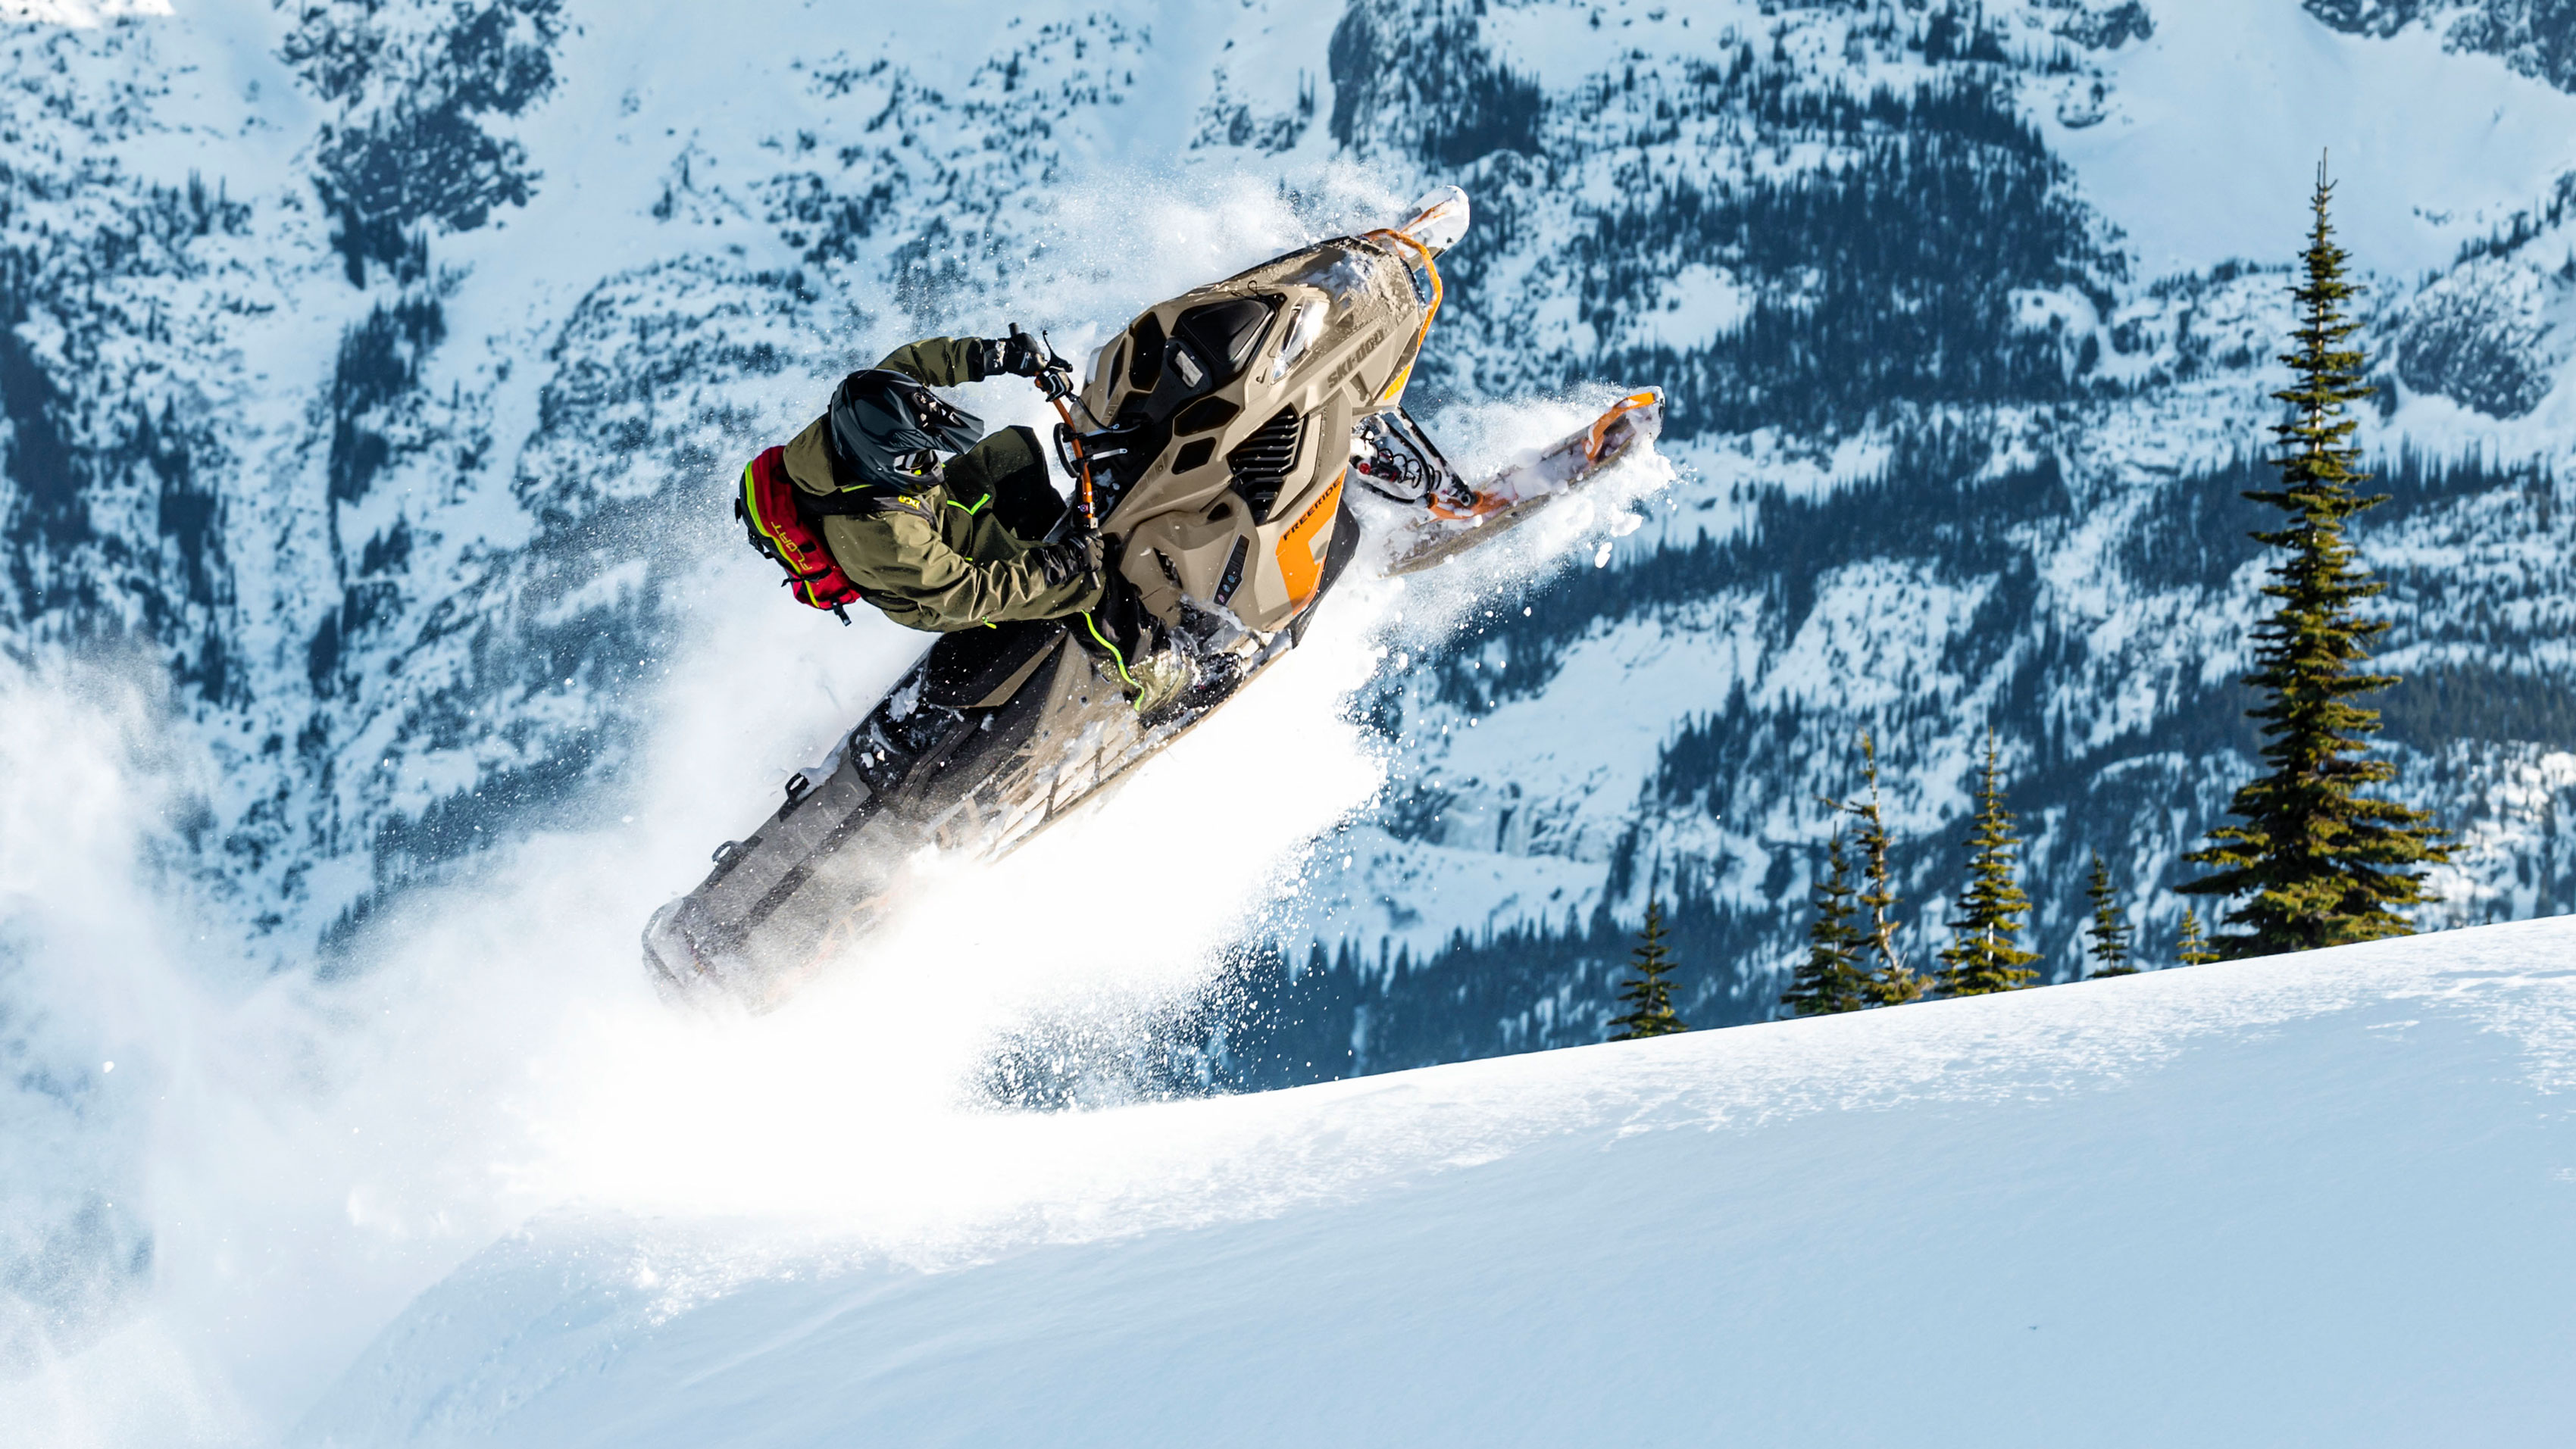 Rider jumping in deep powder with Ski-Doo Freeride